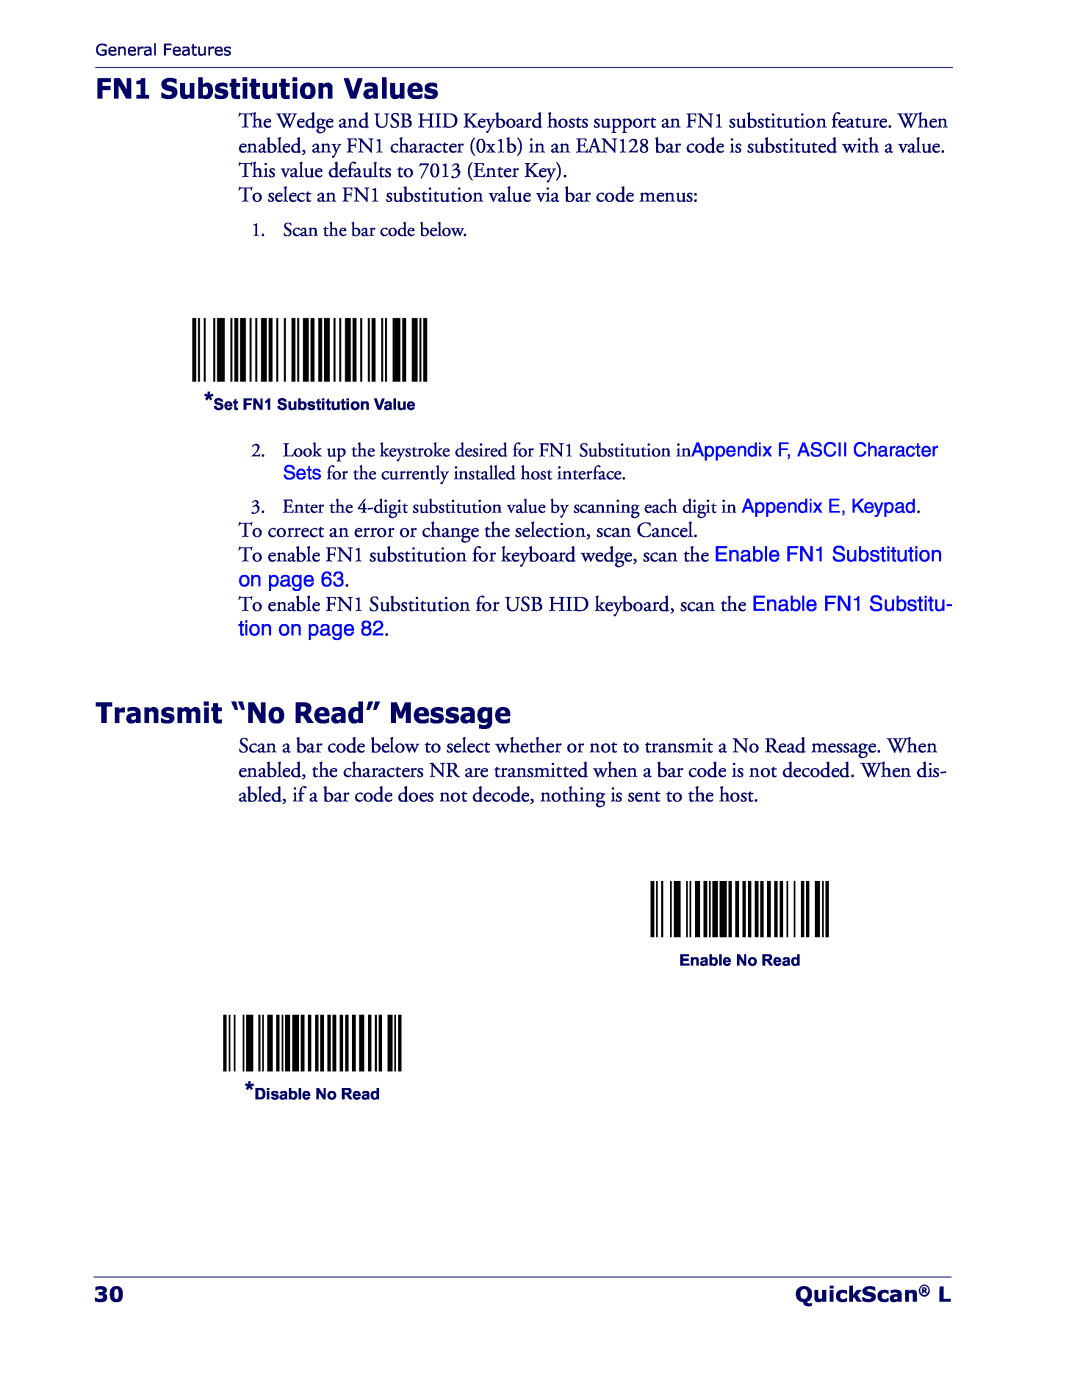 Datalogic Scanning QD 2300 manual FN1 Substitution Values, Transmit “No Read” Message, QuickScan L 